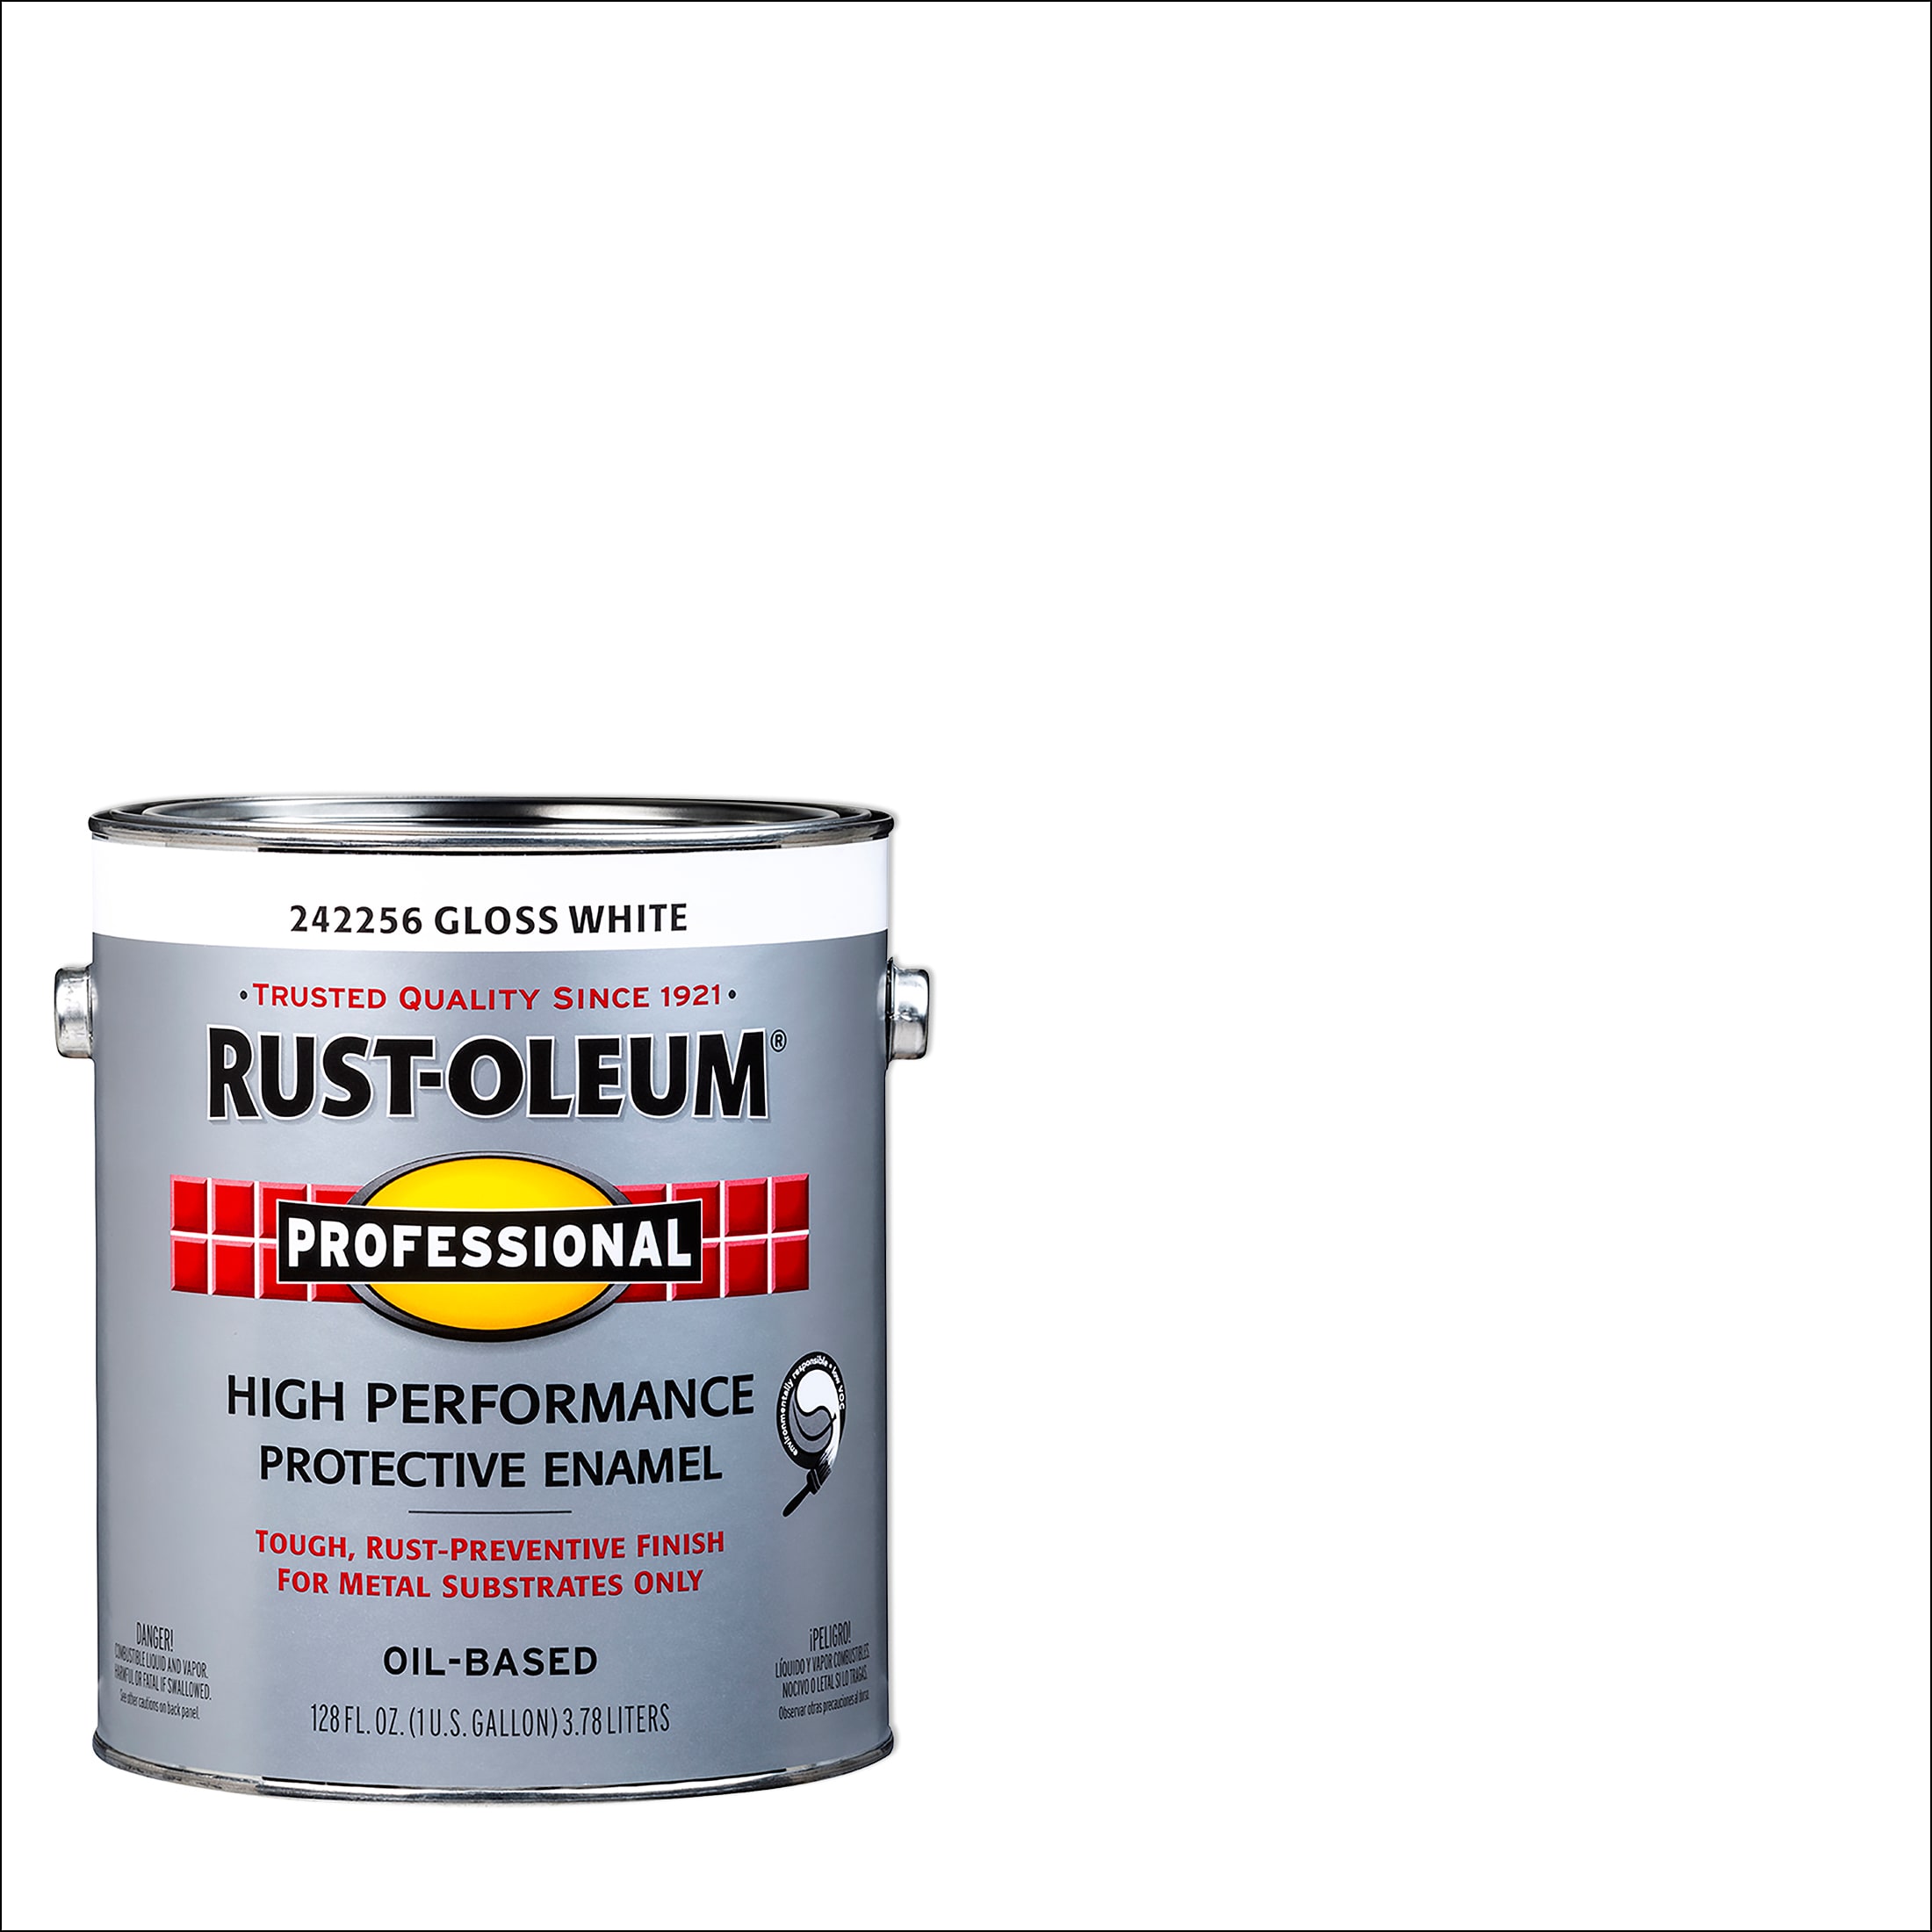 Rust-Oleum - Enamel Spray Paint: Antique White, Gloss, 16 oz - 03688934 -  MSC Industrial Supply